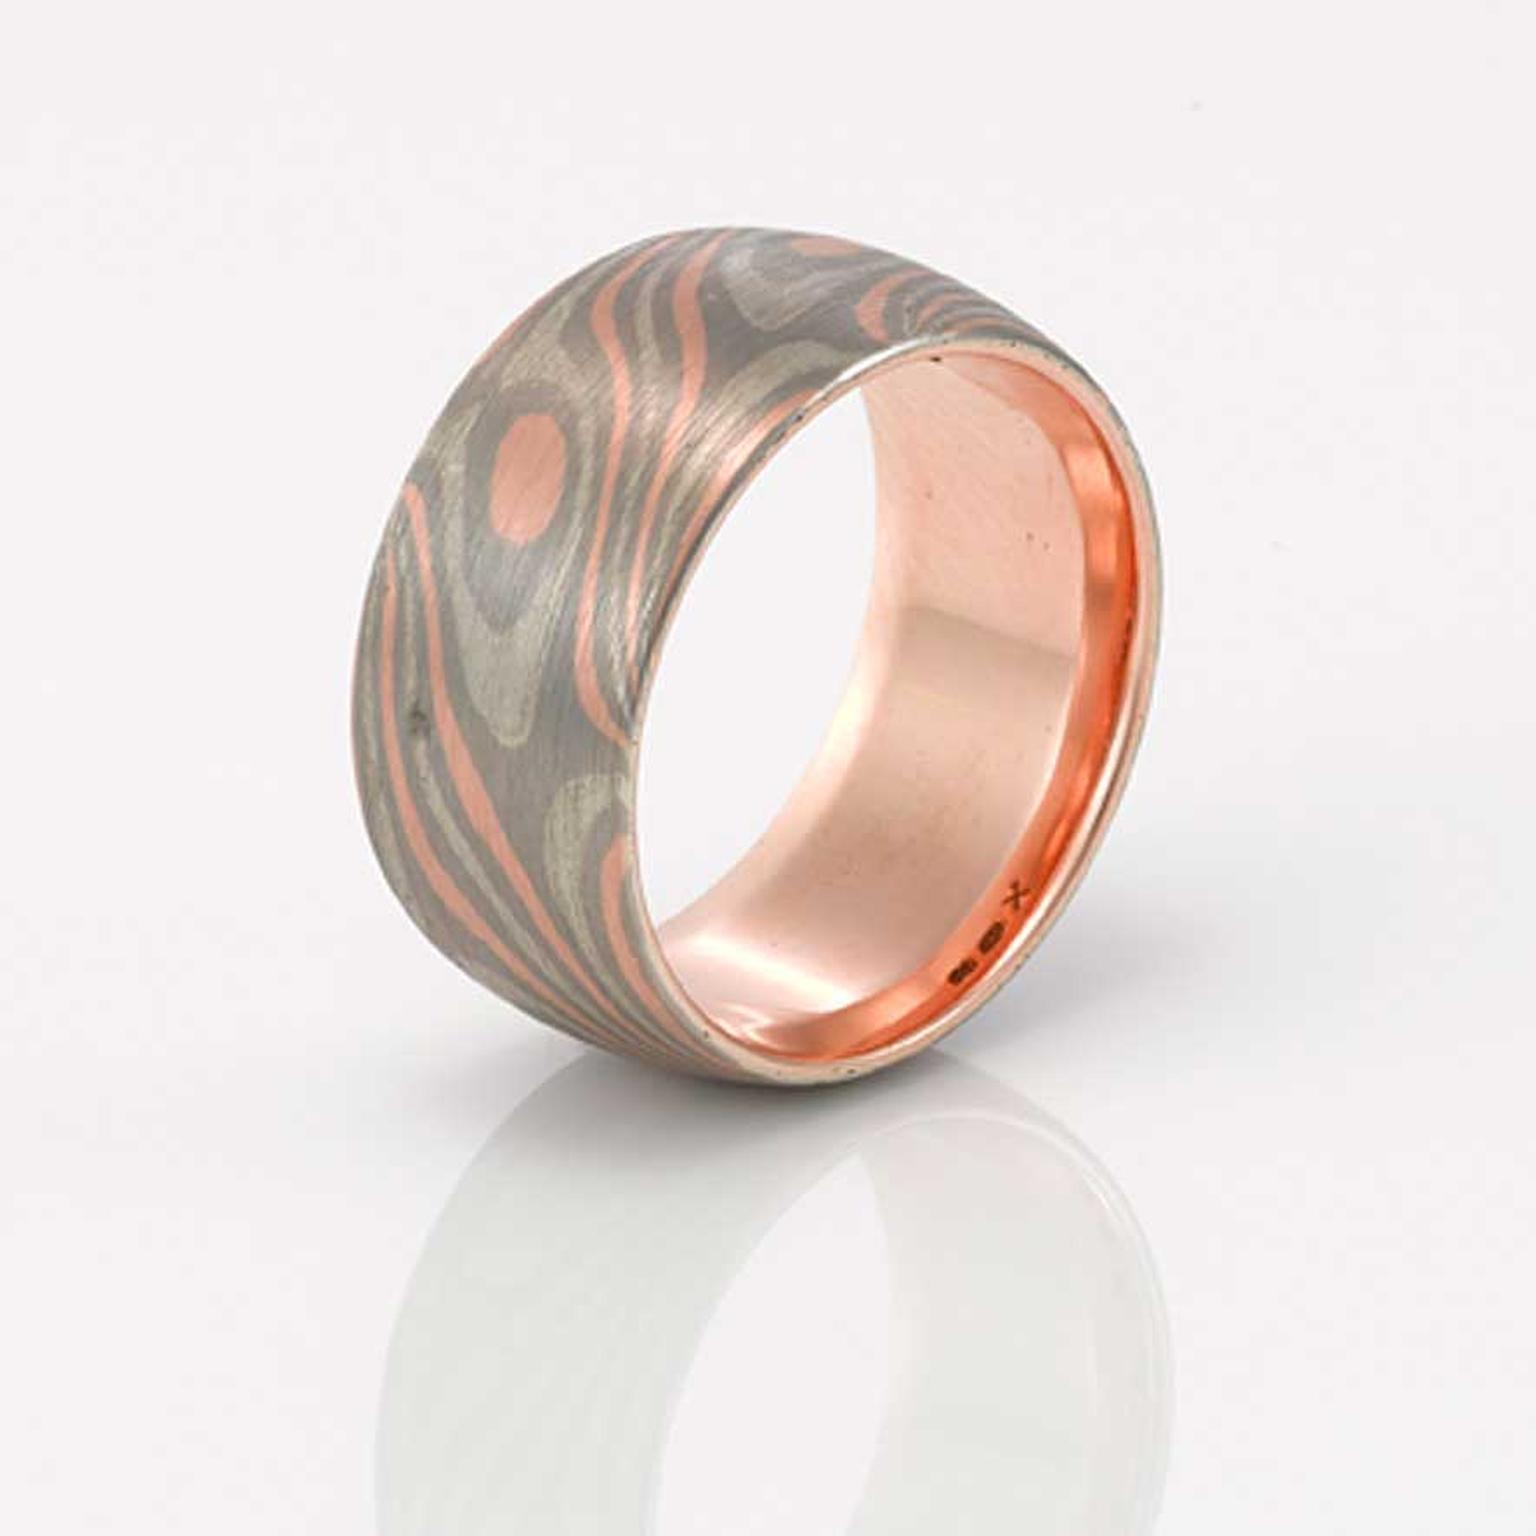 Apollo men's wedding ring in rose gold 